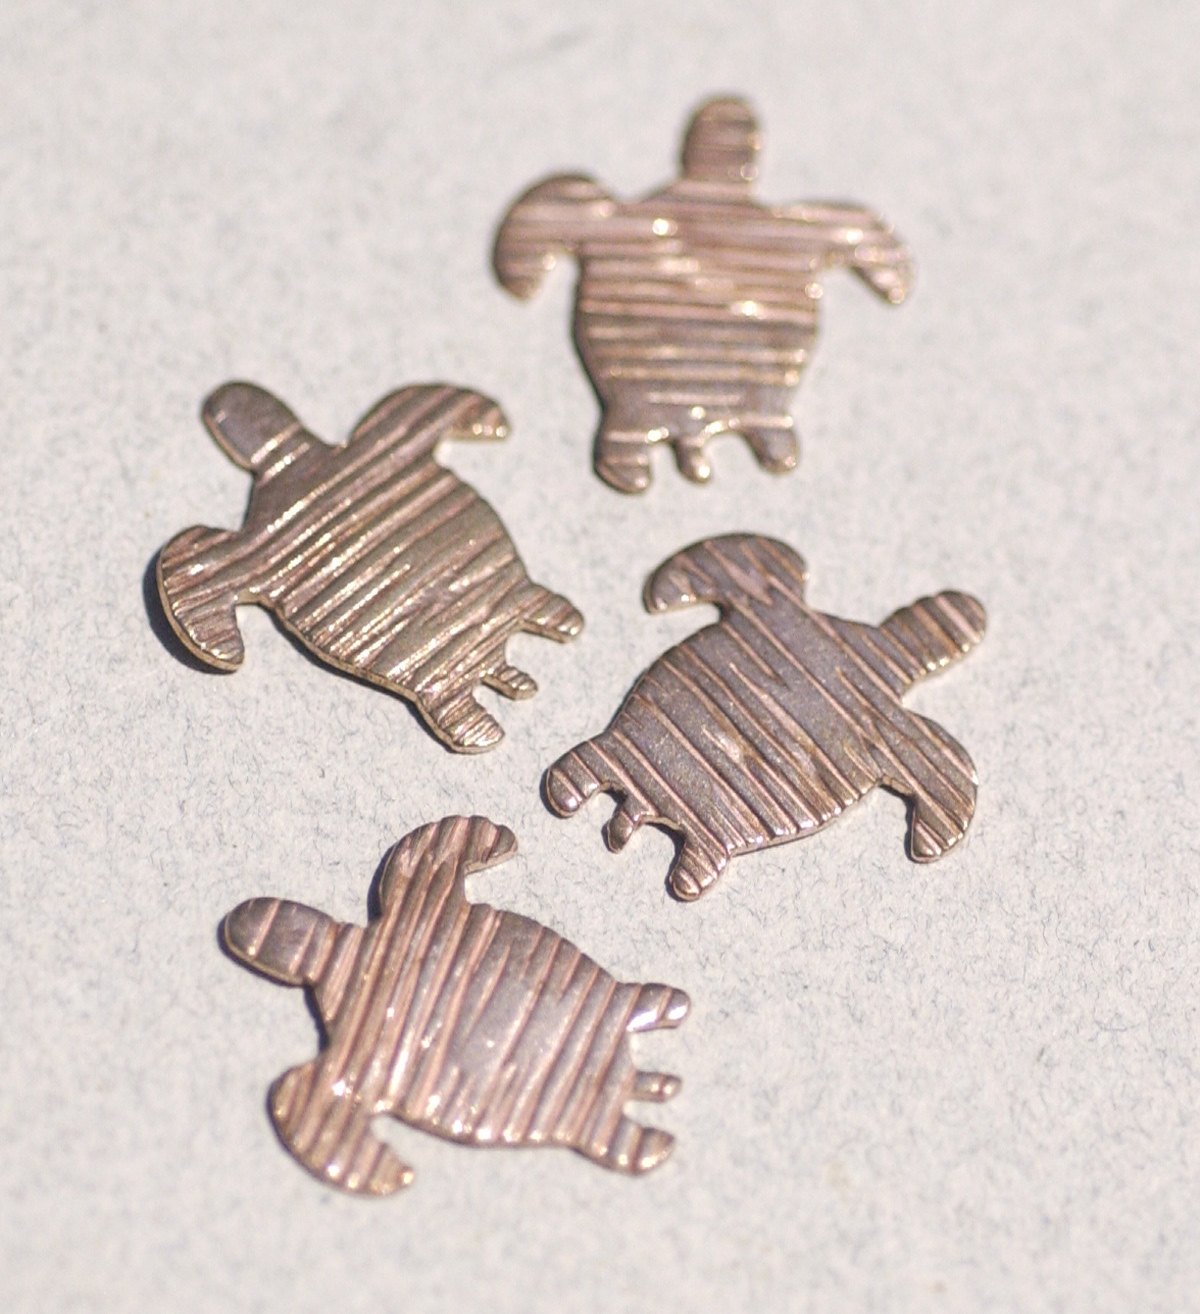 Turtle Woodgrain-Horizontal Pattern 20mm x 23mm for Blanks Enameling Stamping Texturing Variety of Metals